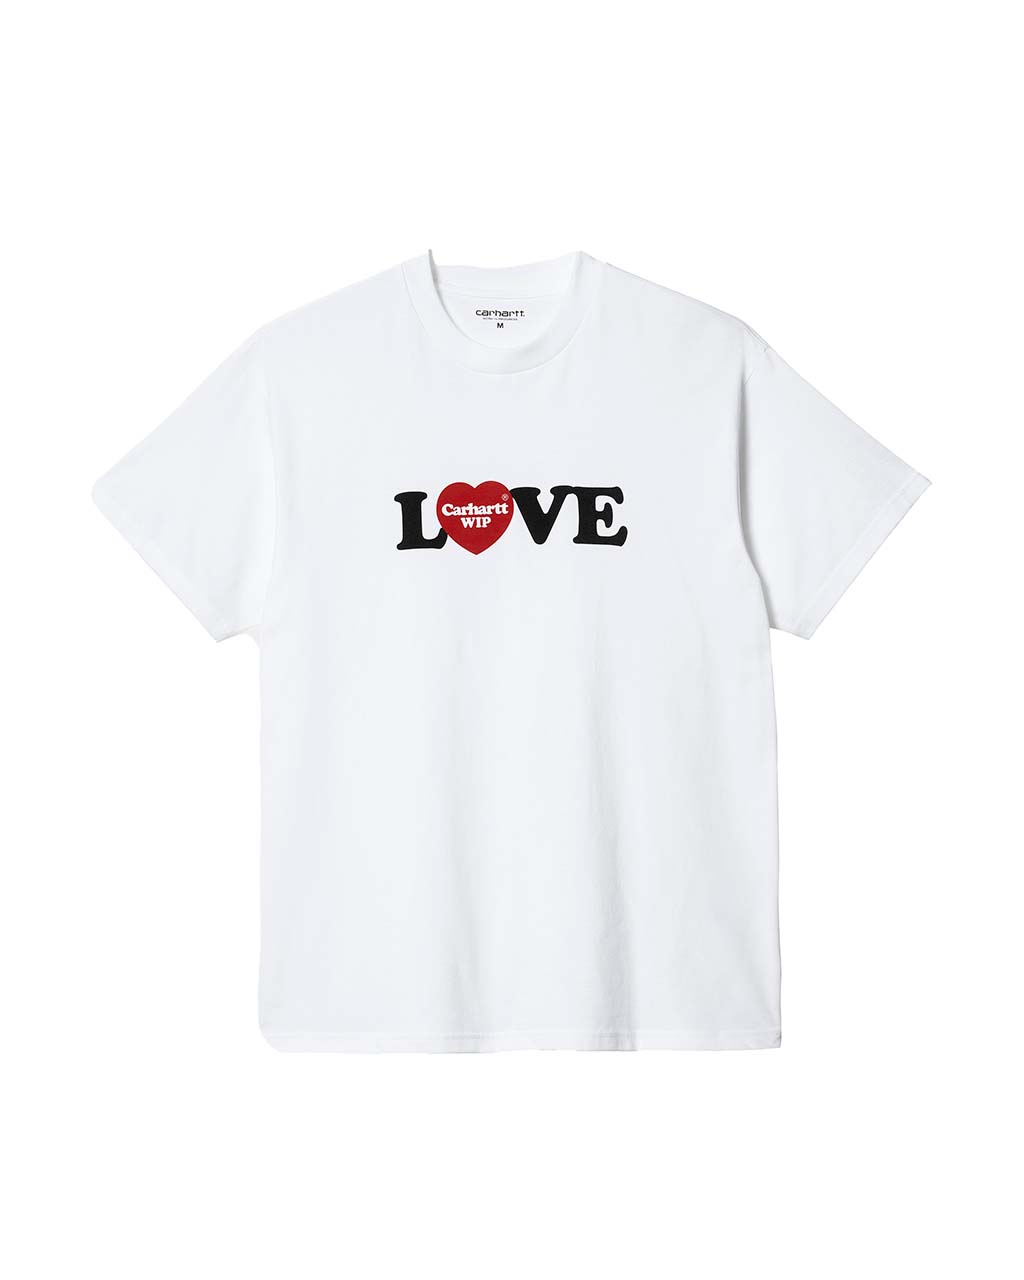 Carhartt WIP S/S Love T-Shirt